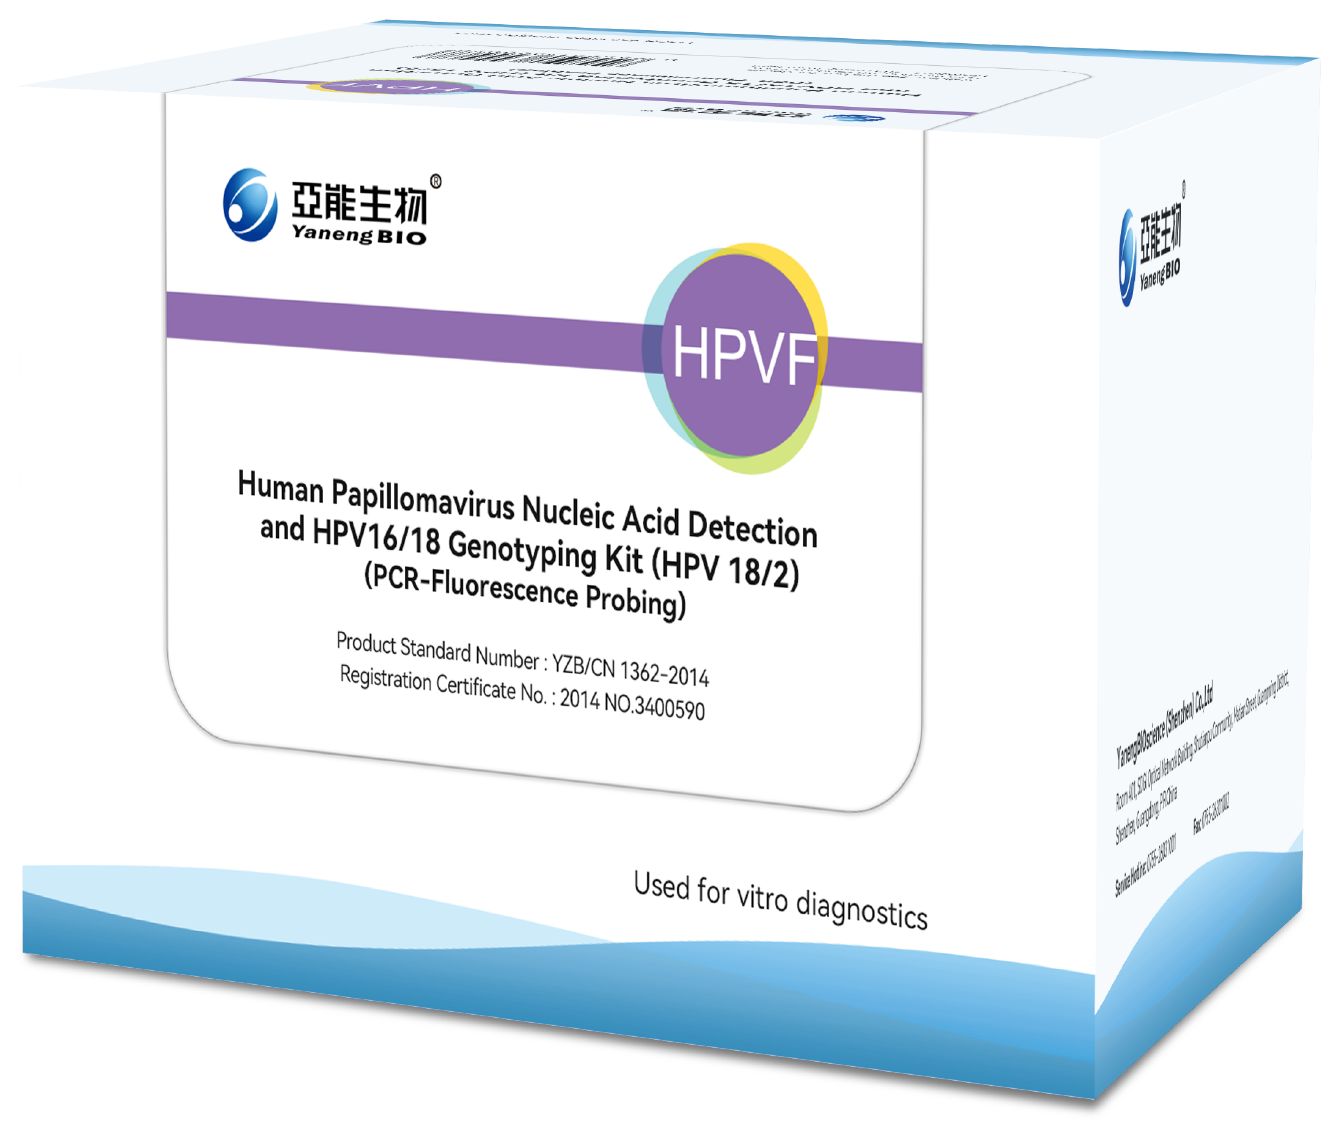 Human Papillomavirus Nucleic Acid Detection and HPV16/18 Genotyping Kit -- HPV 18/2